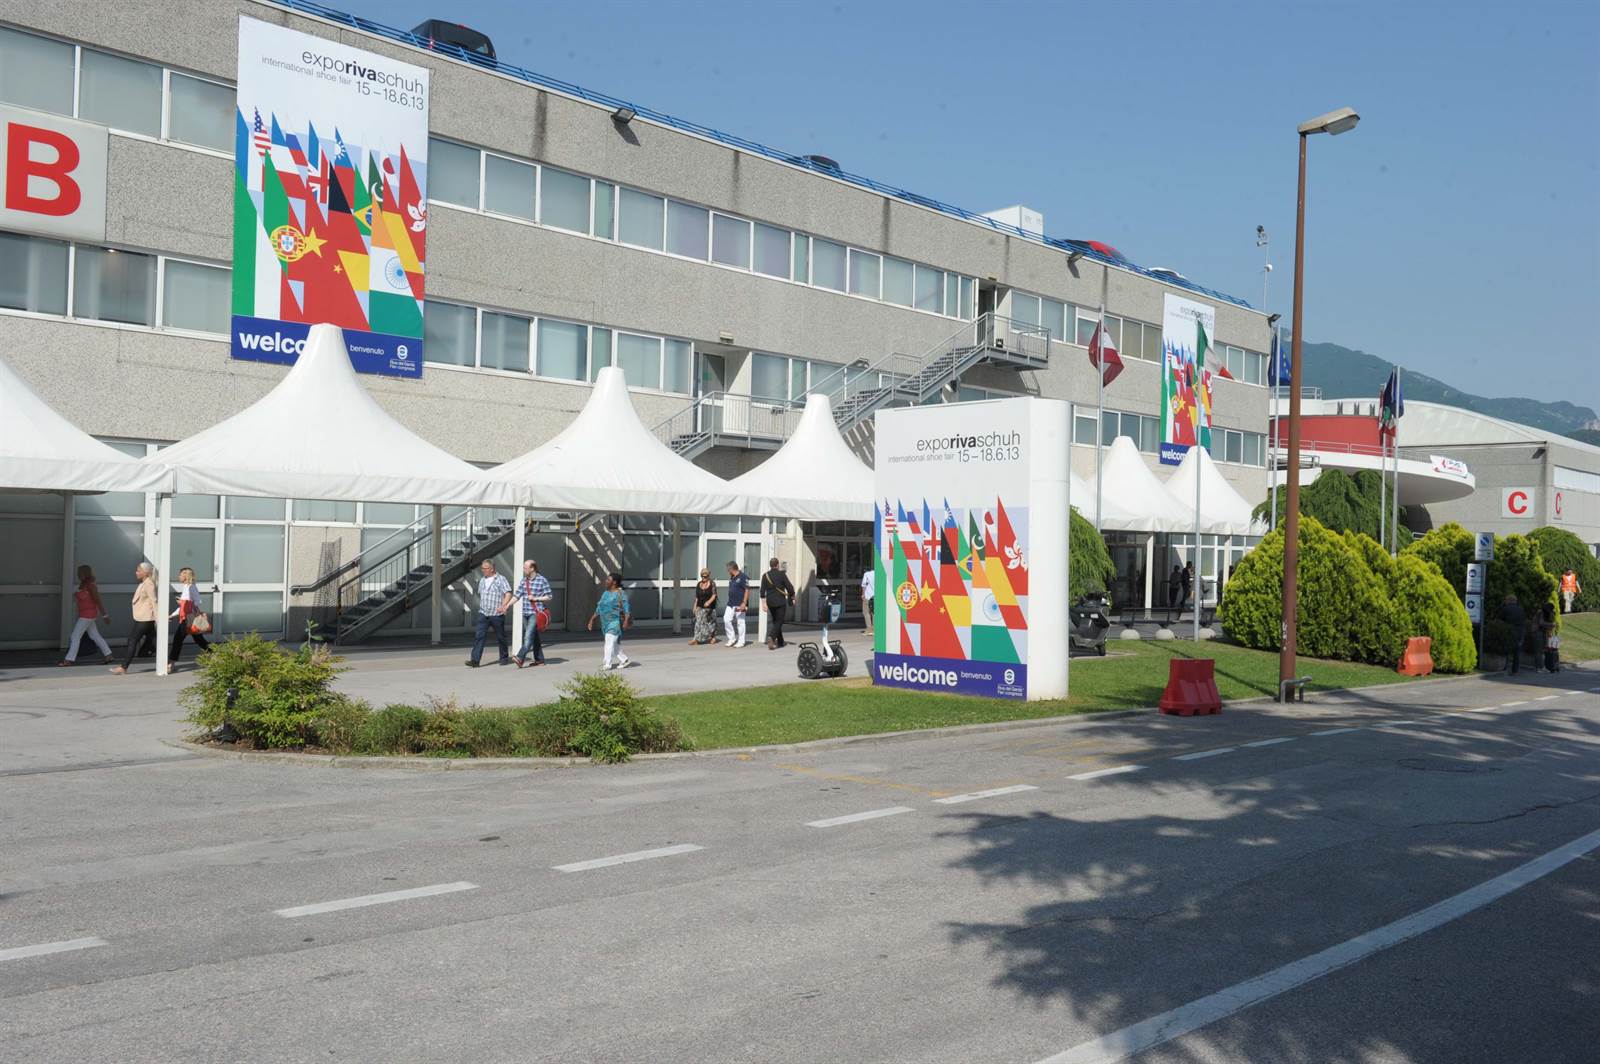 Shuttle service to Riva del Garda Exhibition Center or Expo Riva Schuh 2019